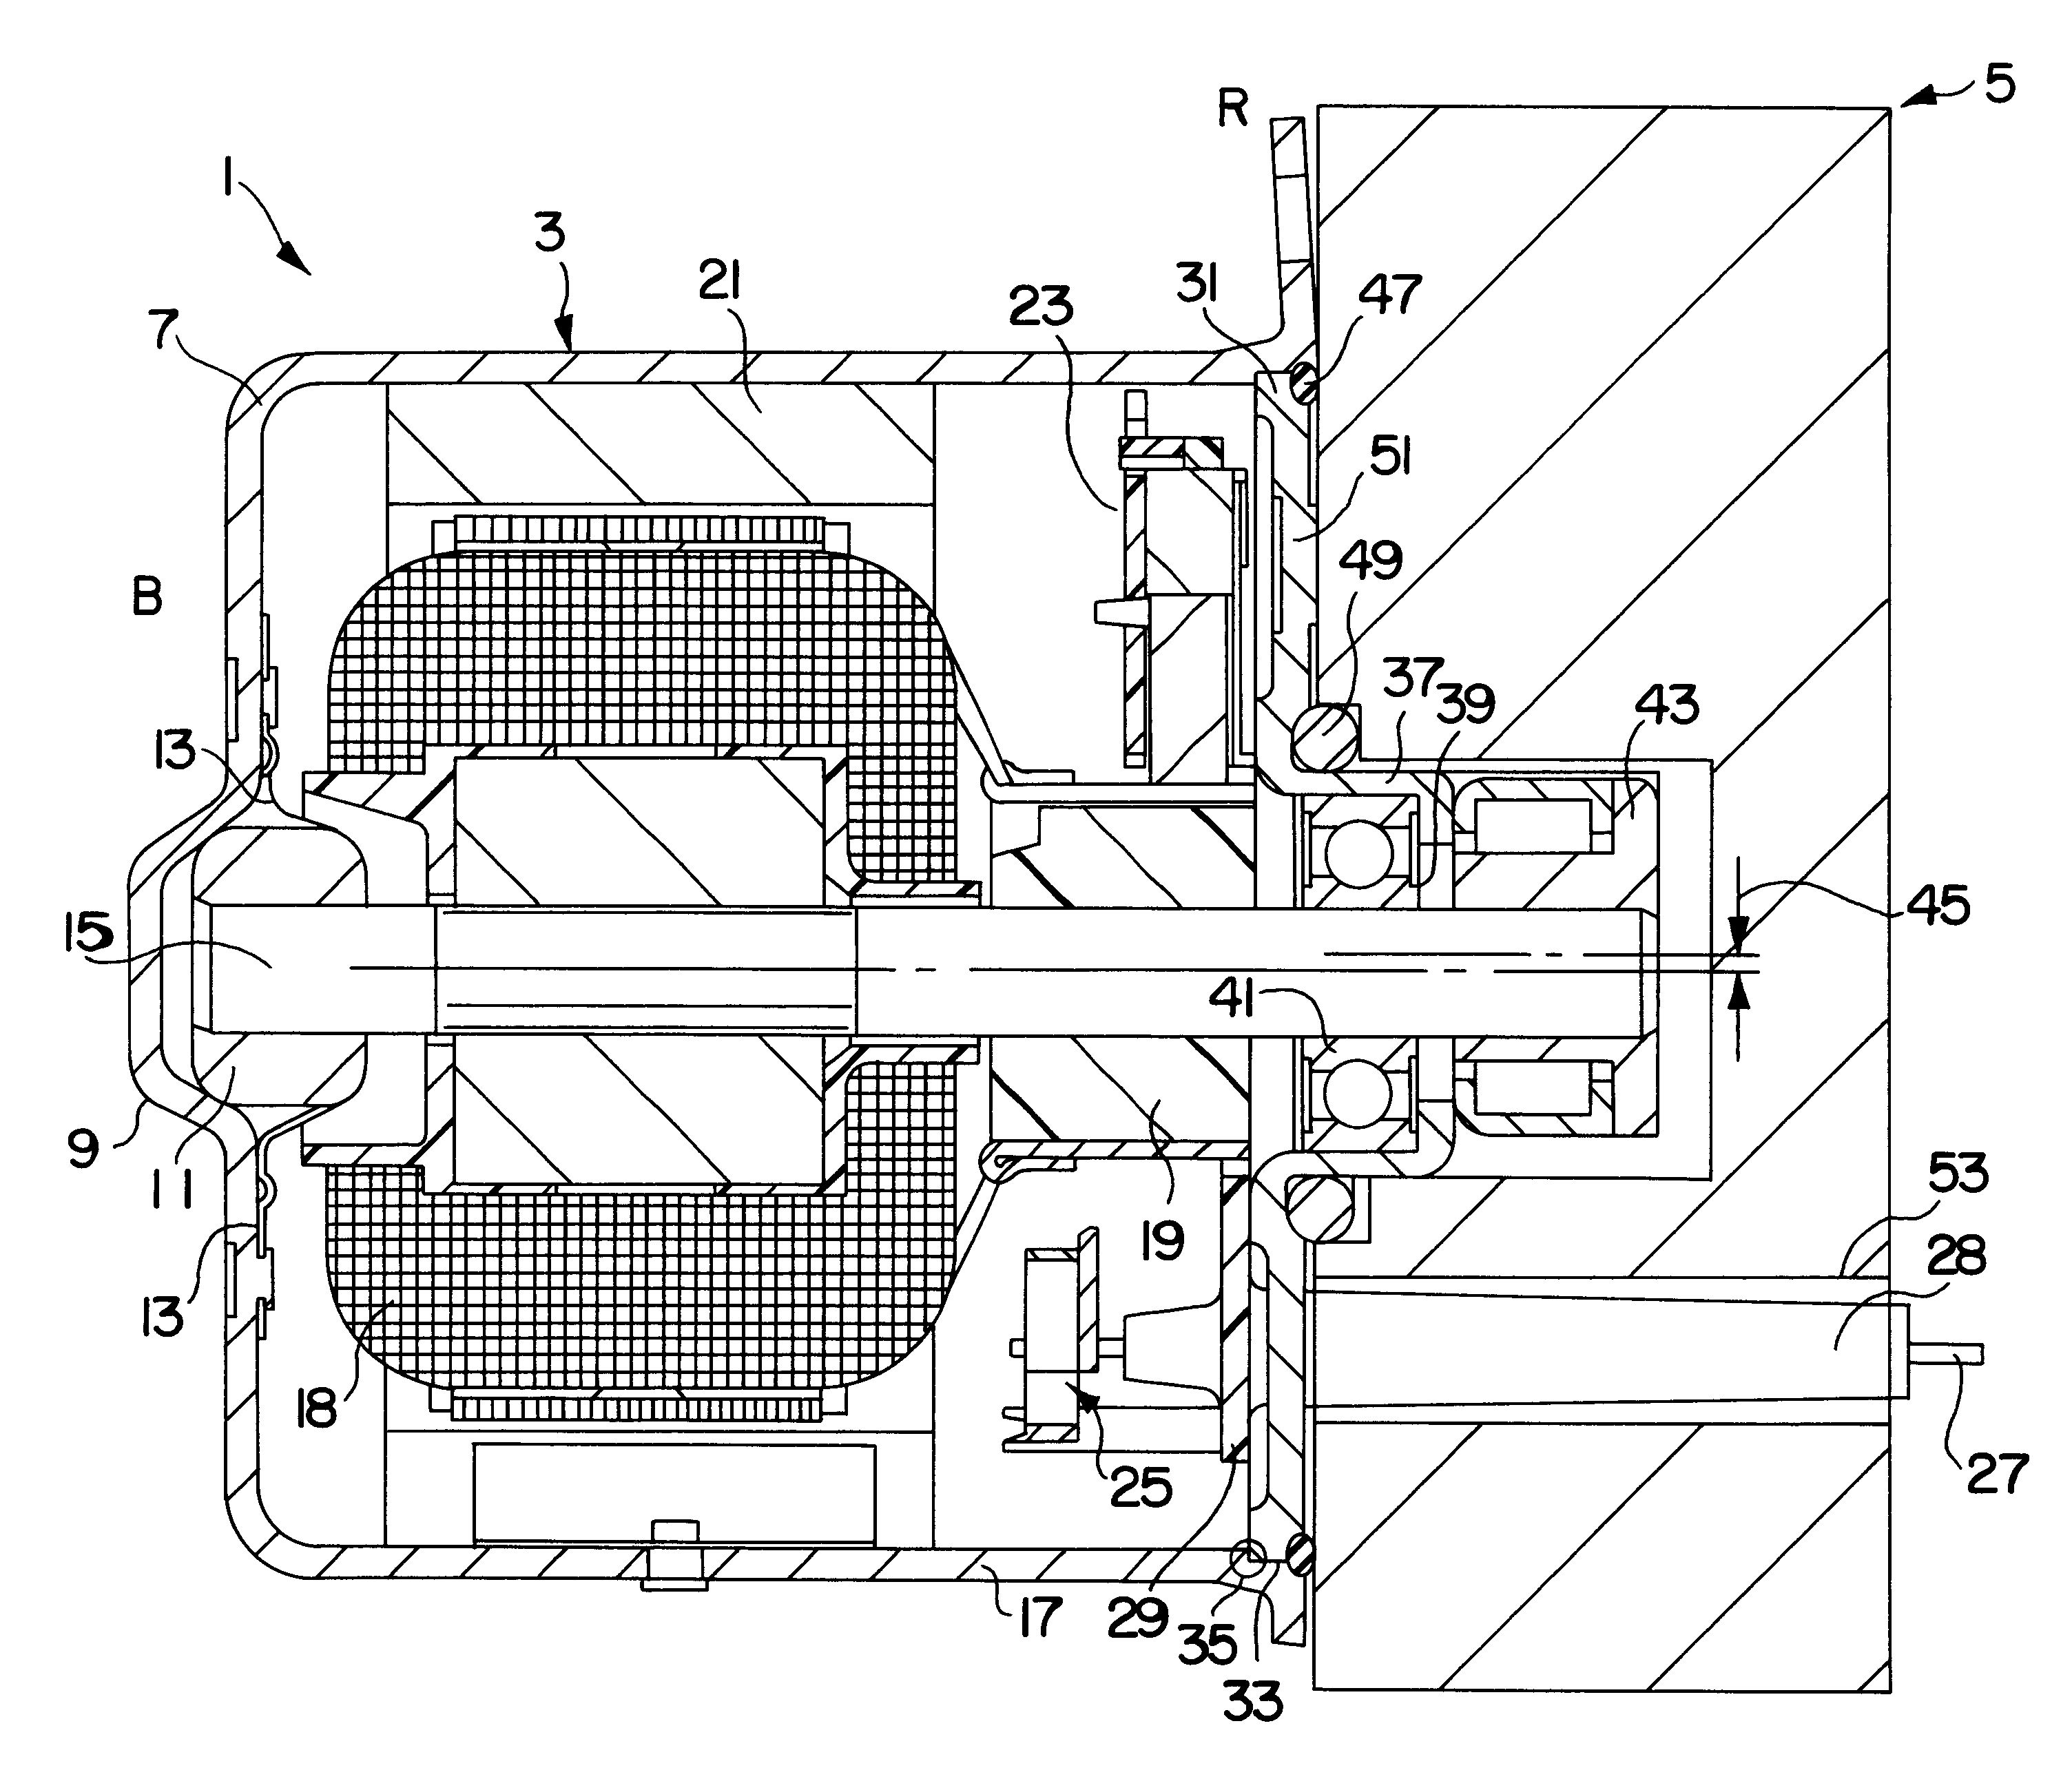 Motor-pump arrangement